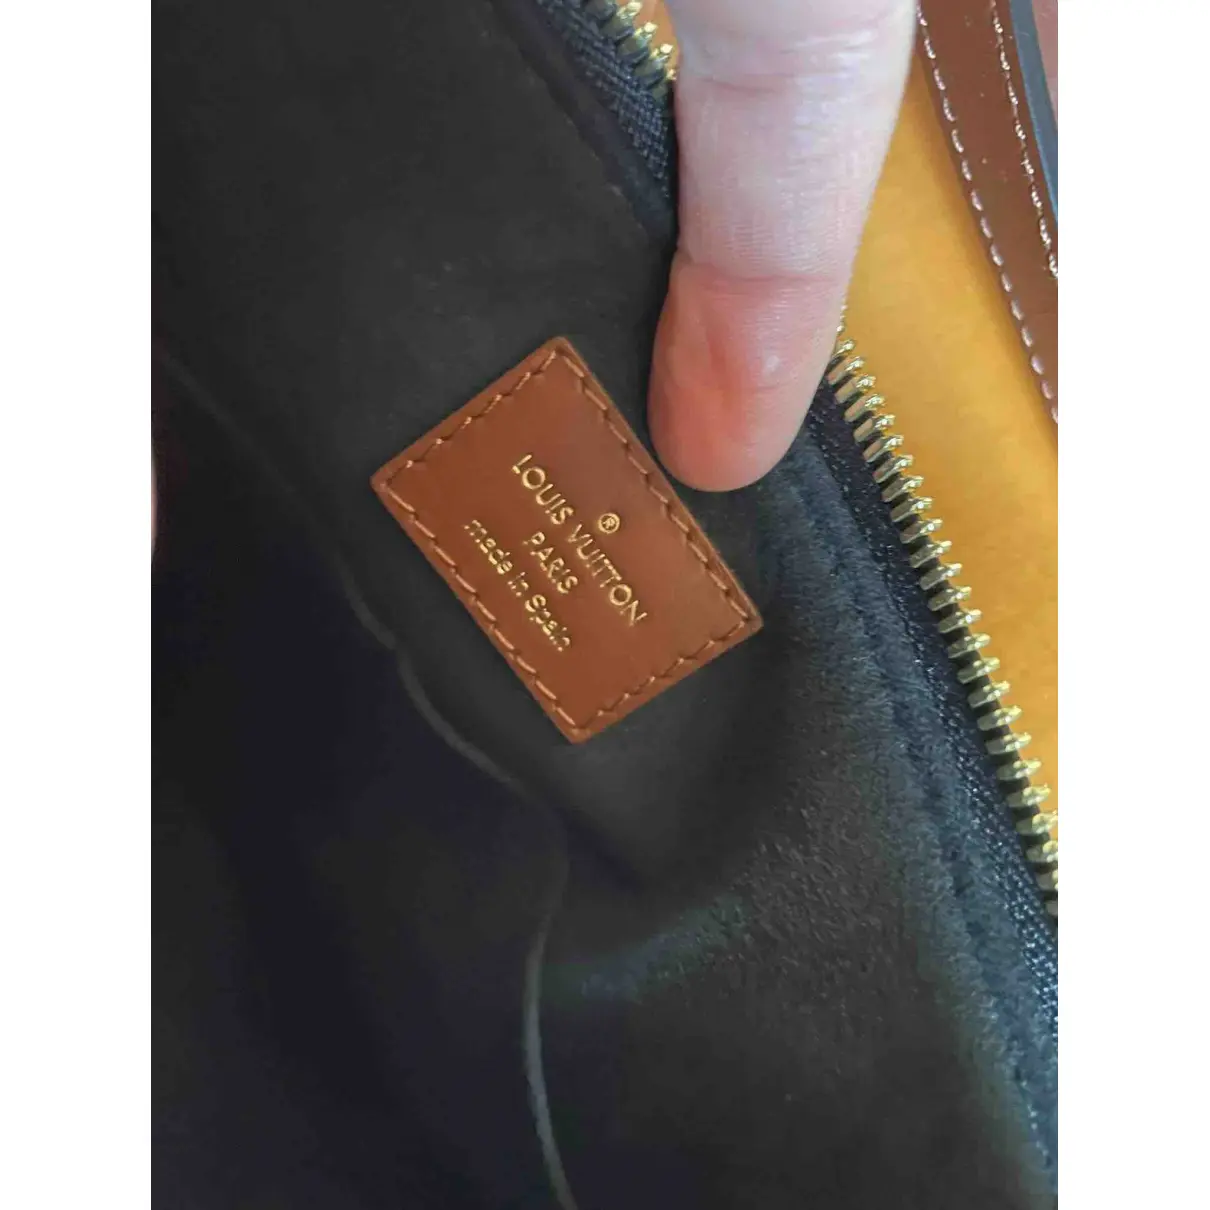 Tote V leather handbag Louis Vuitton